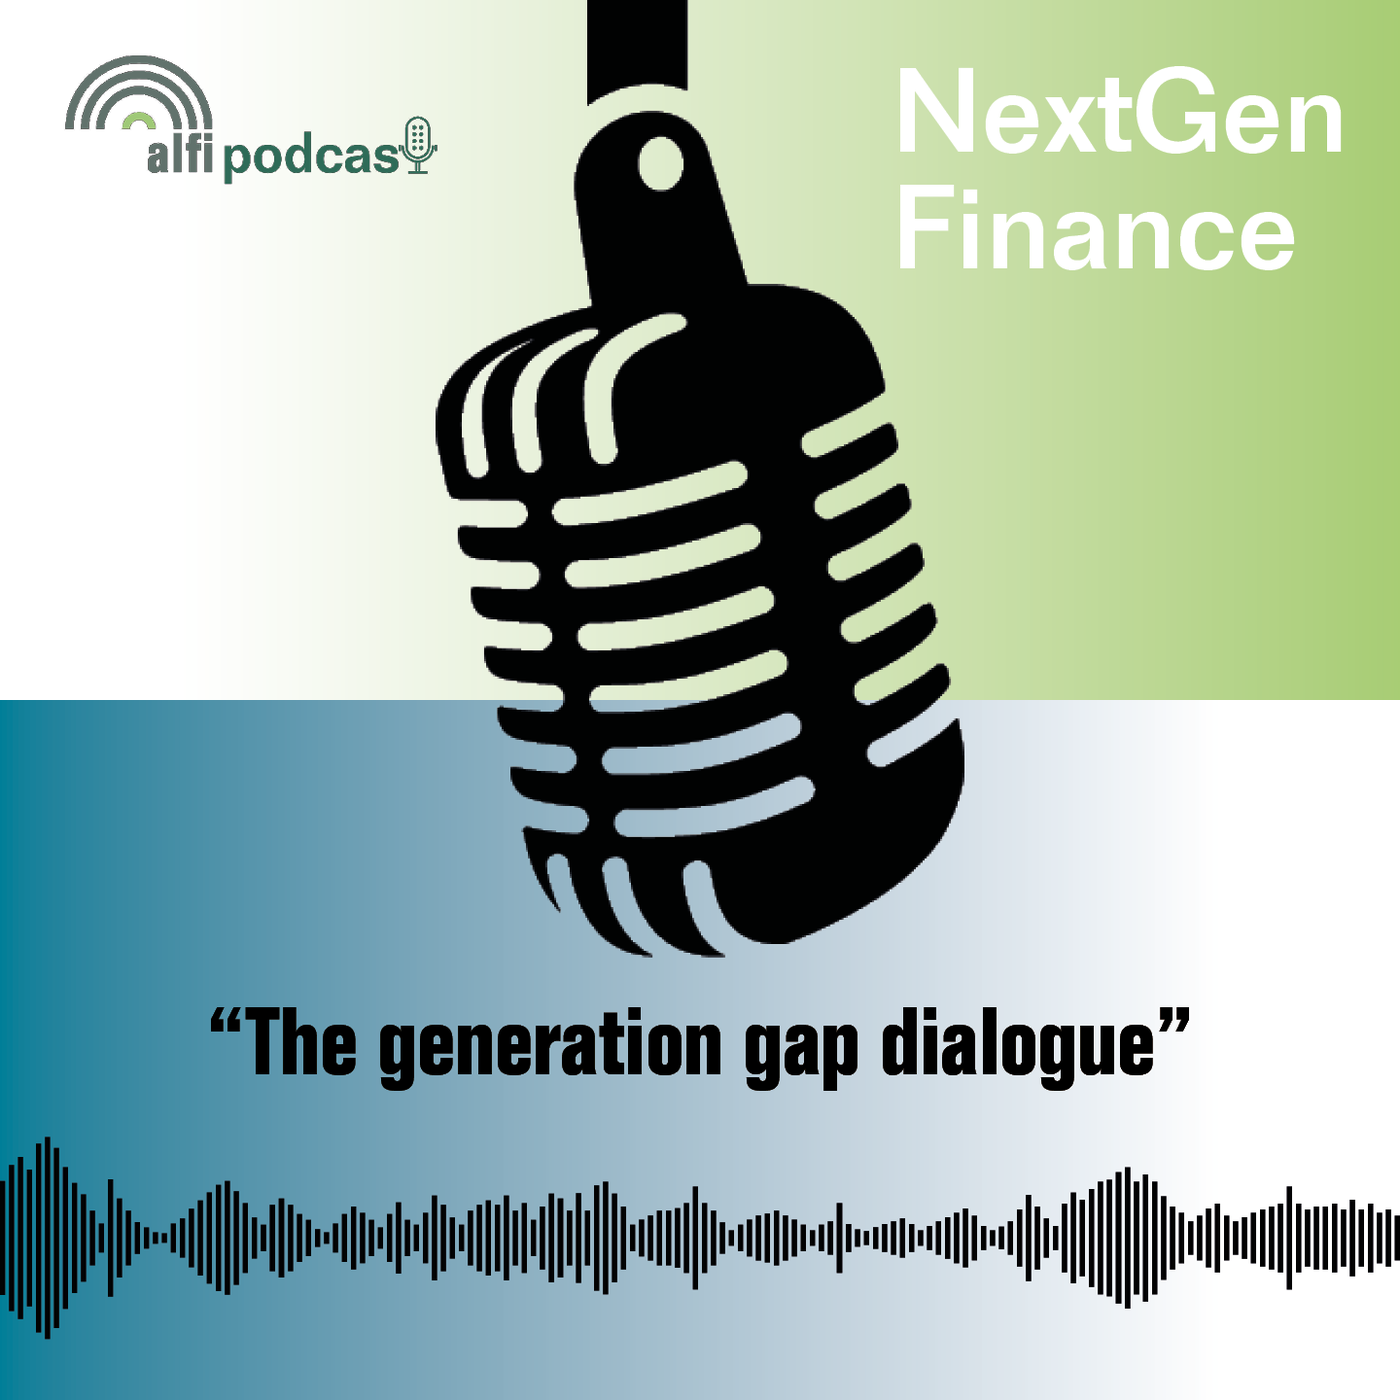 The generation gap dialogue